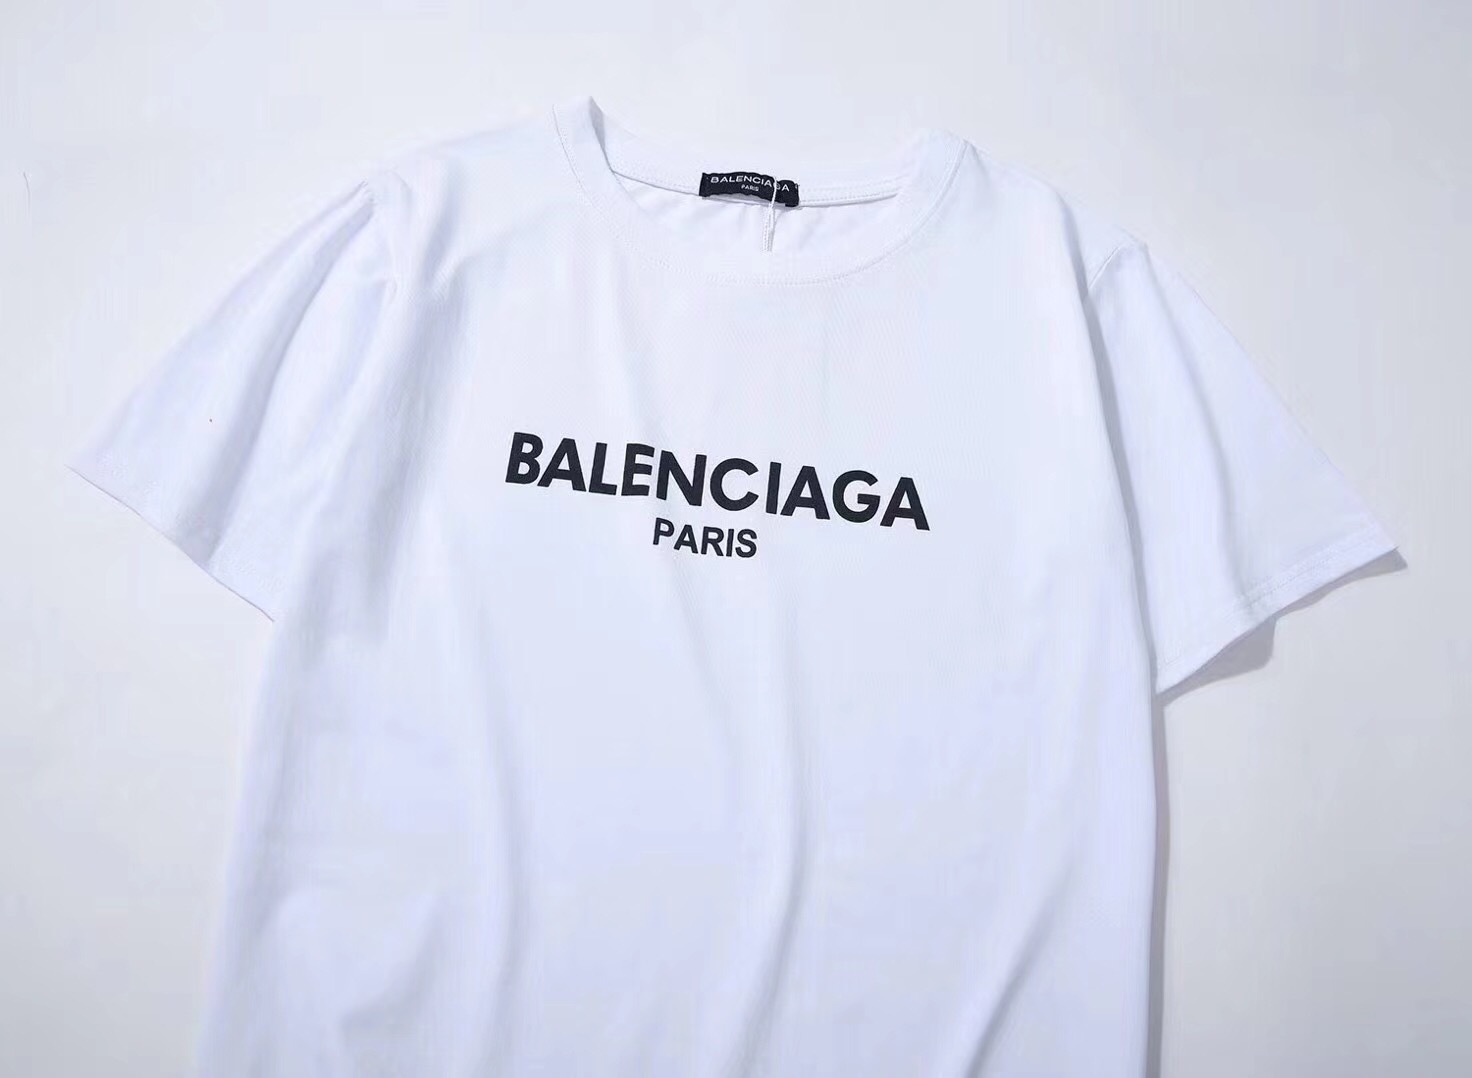 Balenciaga Paris футболка мужская